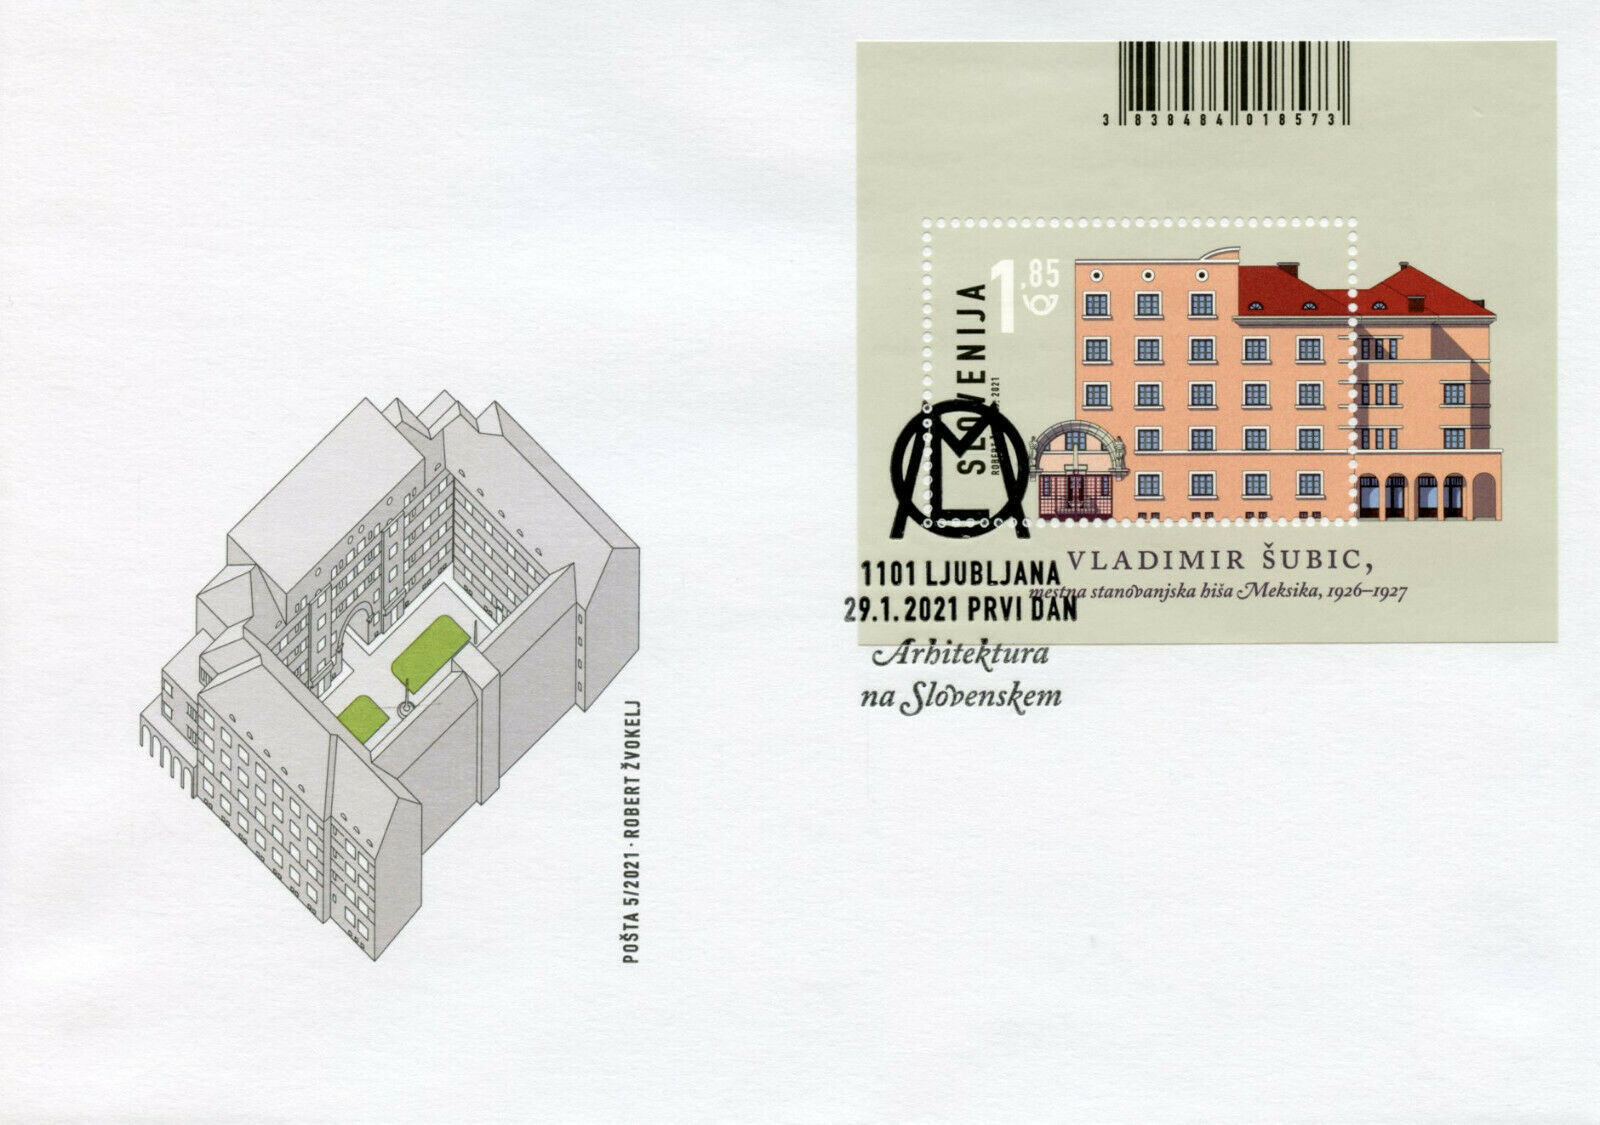 Slovenia Architecture Stamps 2021 FDC Meksika Building Vladimir Subic 1v M/S